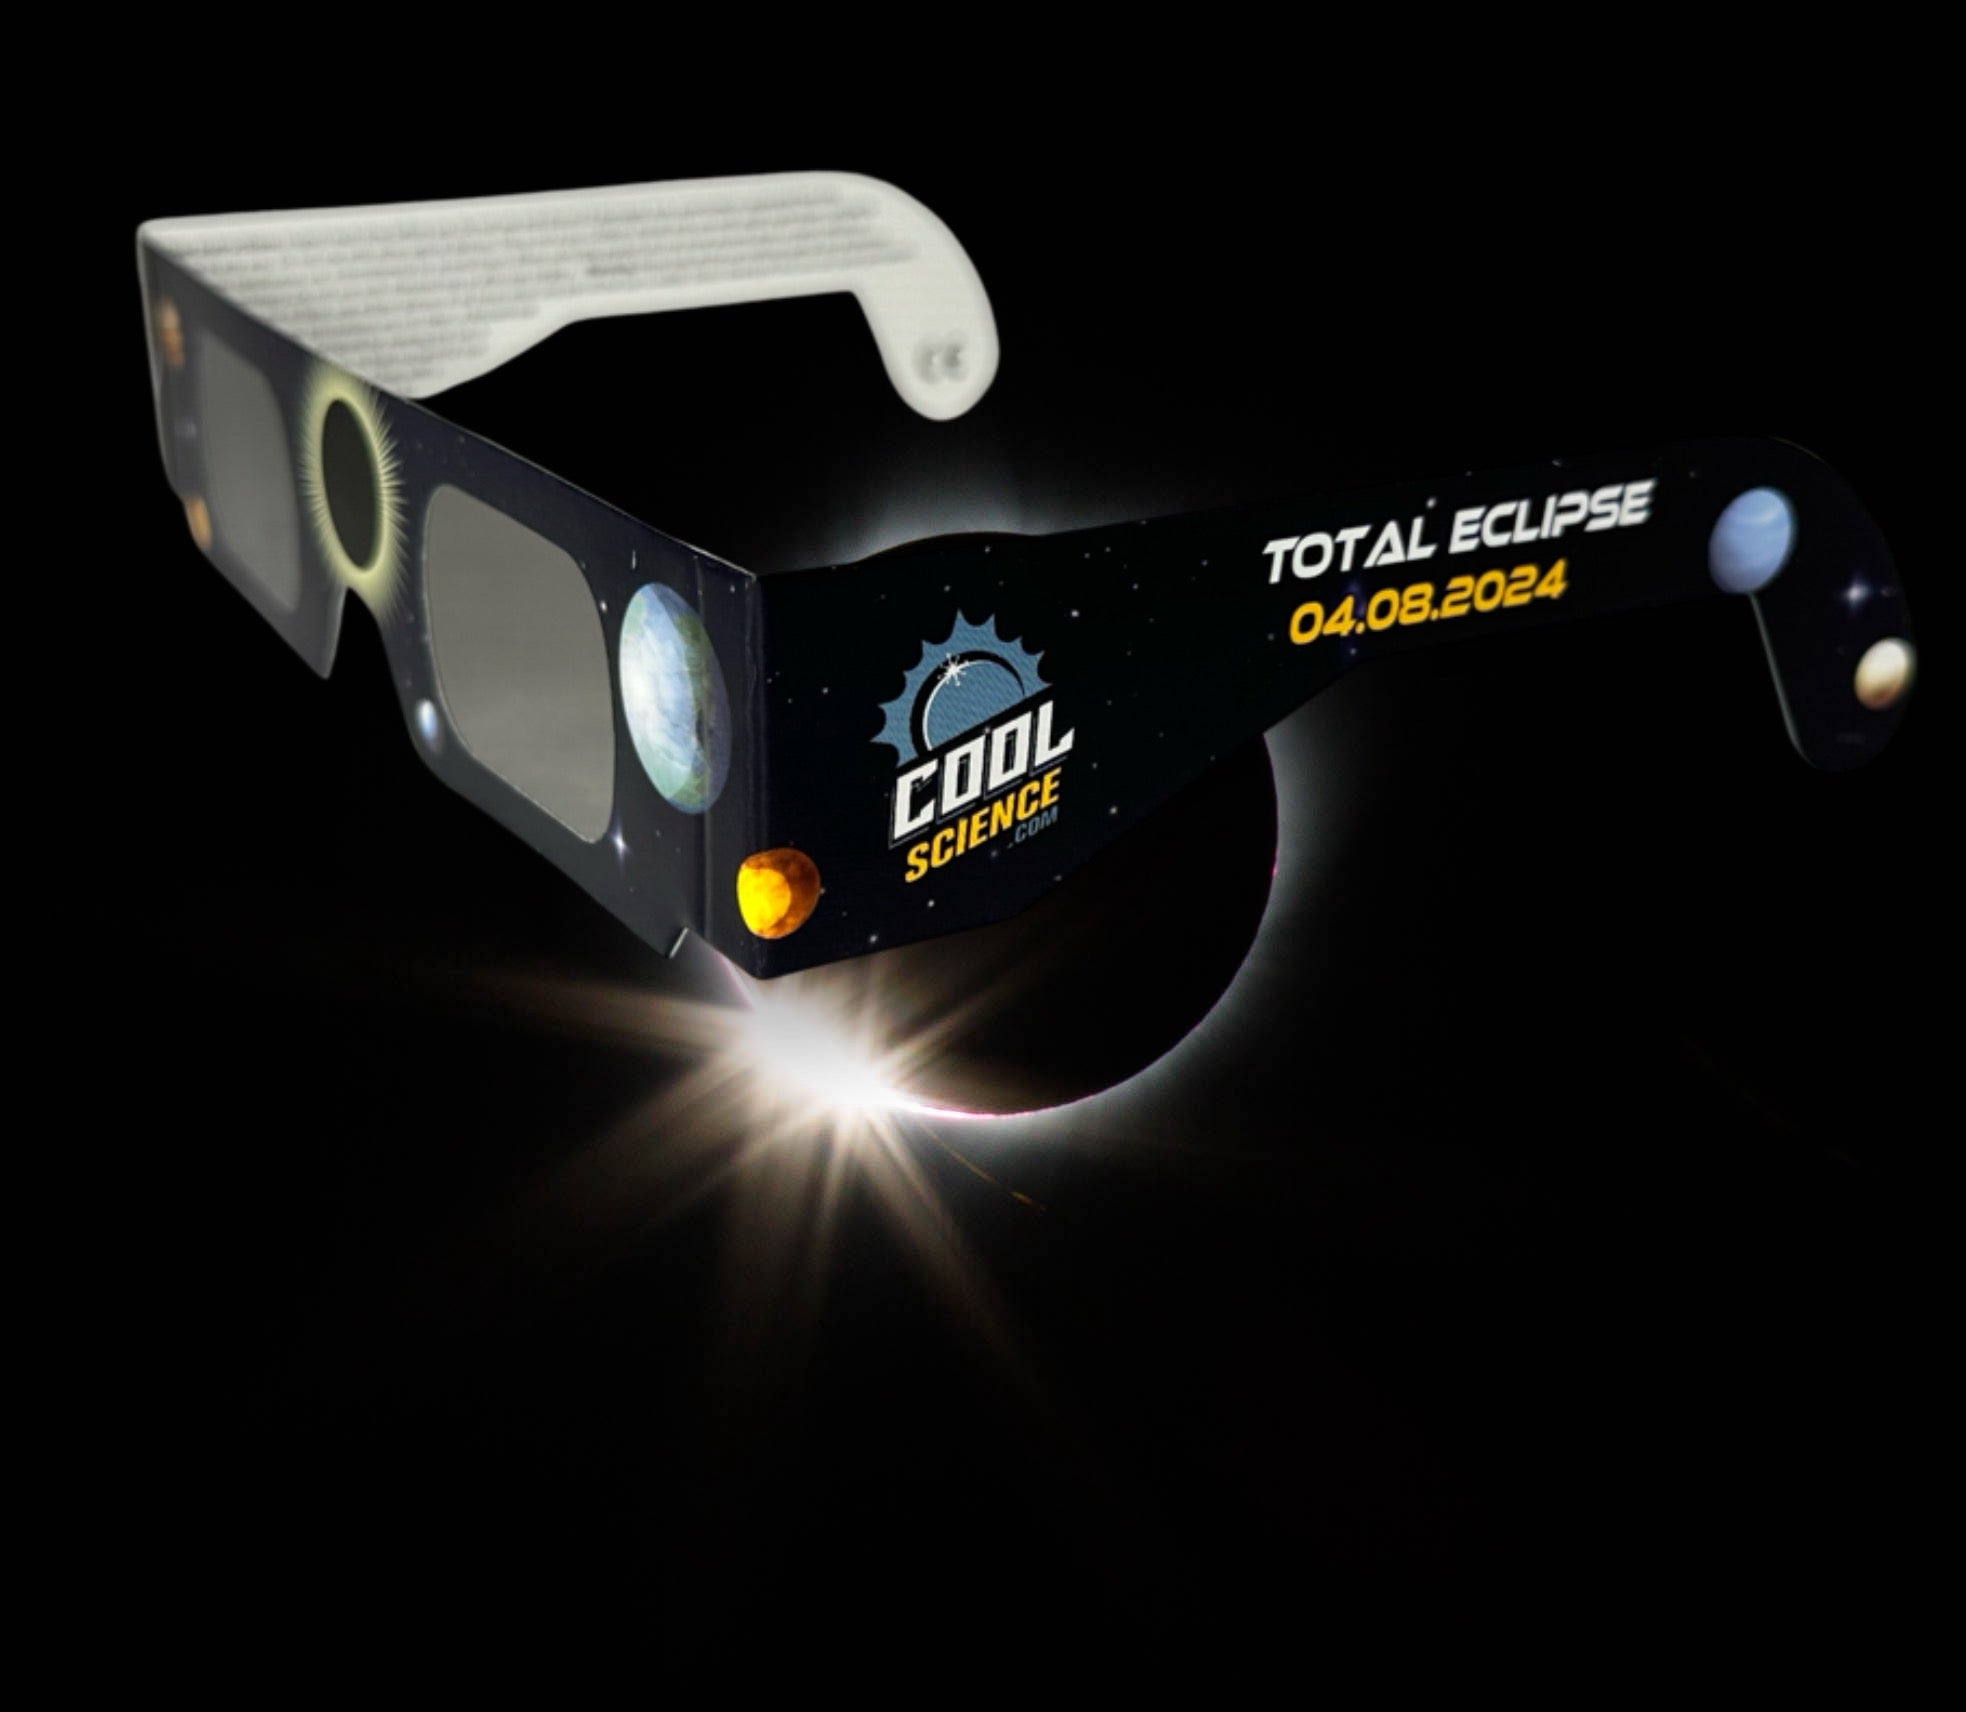 April 2024 total solar eclipse glasses for safe viewing